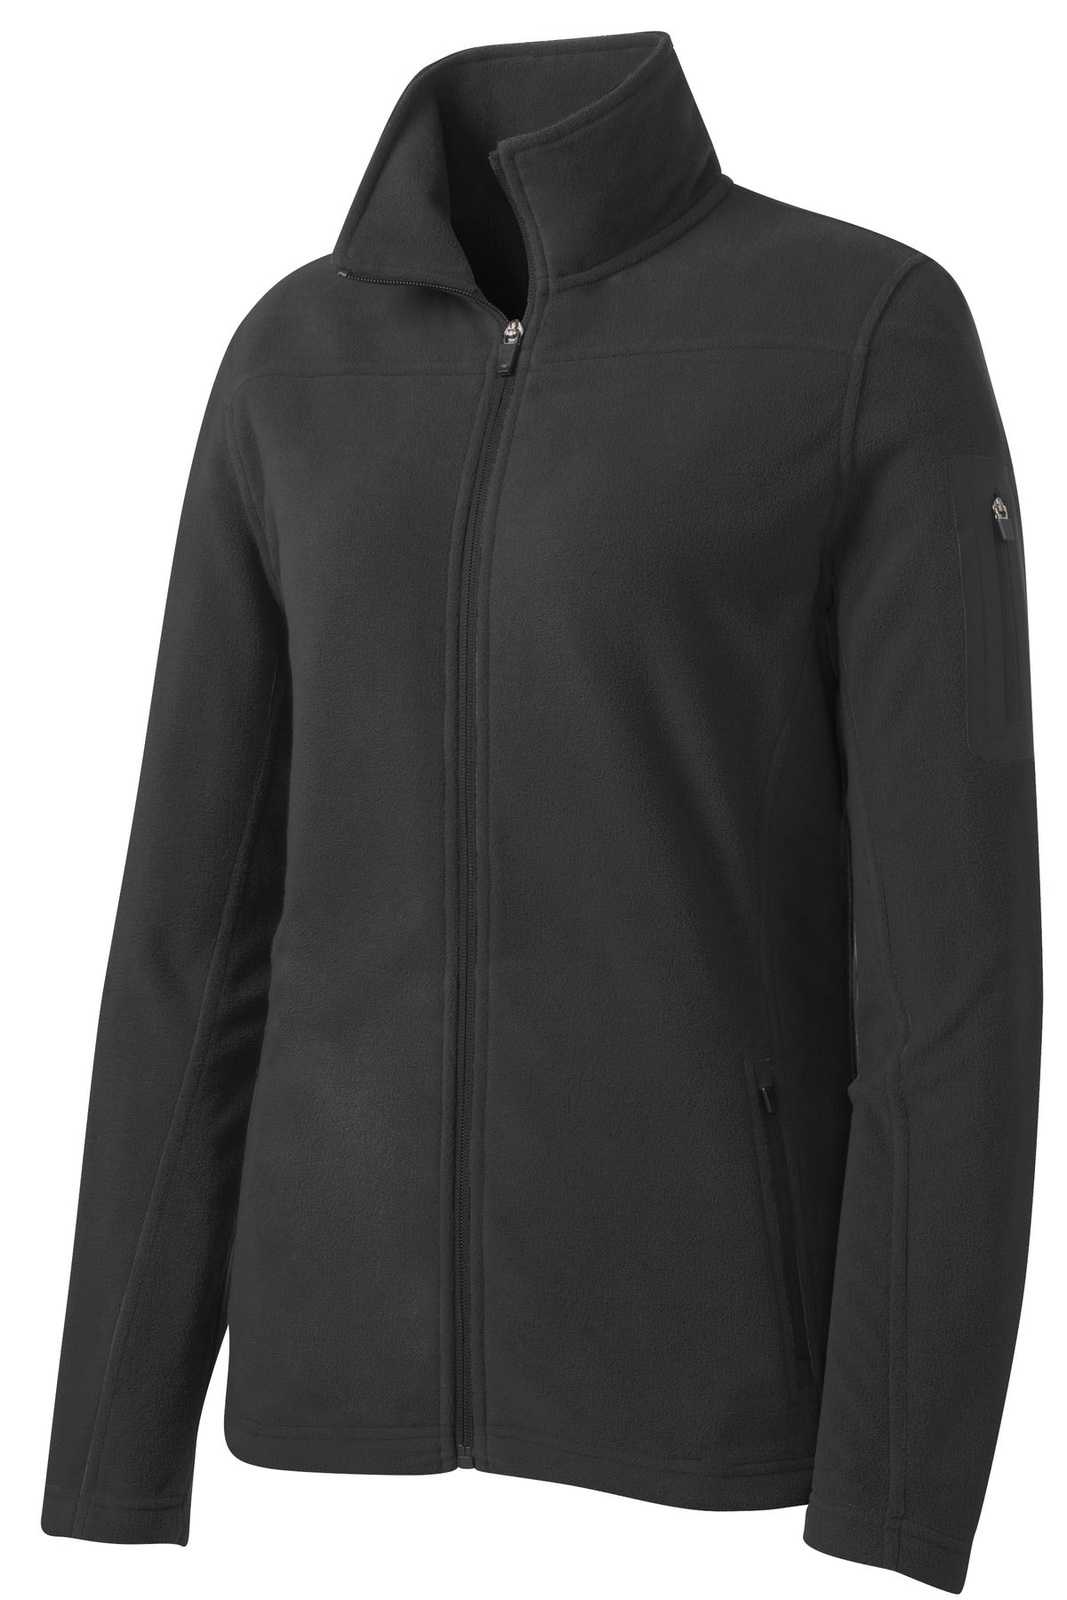 Port Authority L233 Ladies Summit Fleece Full-Zip Jacket - Black Black - HIT a Double - 5